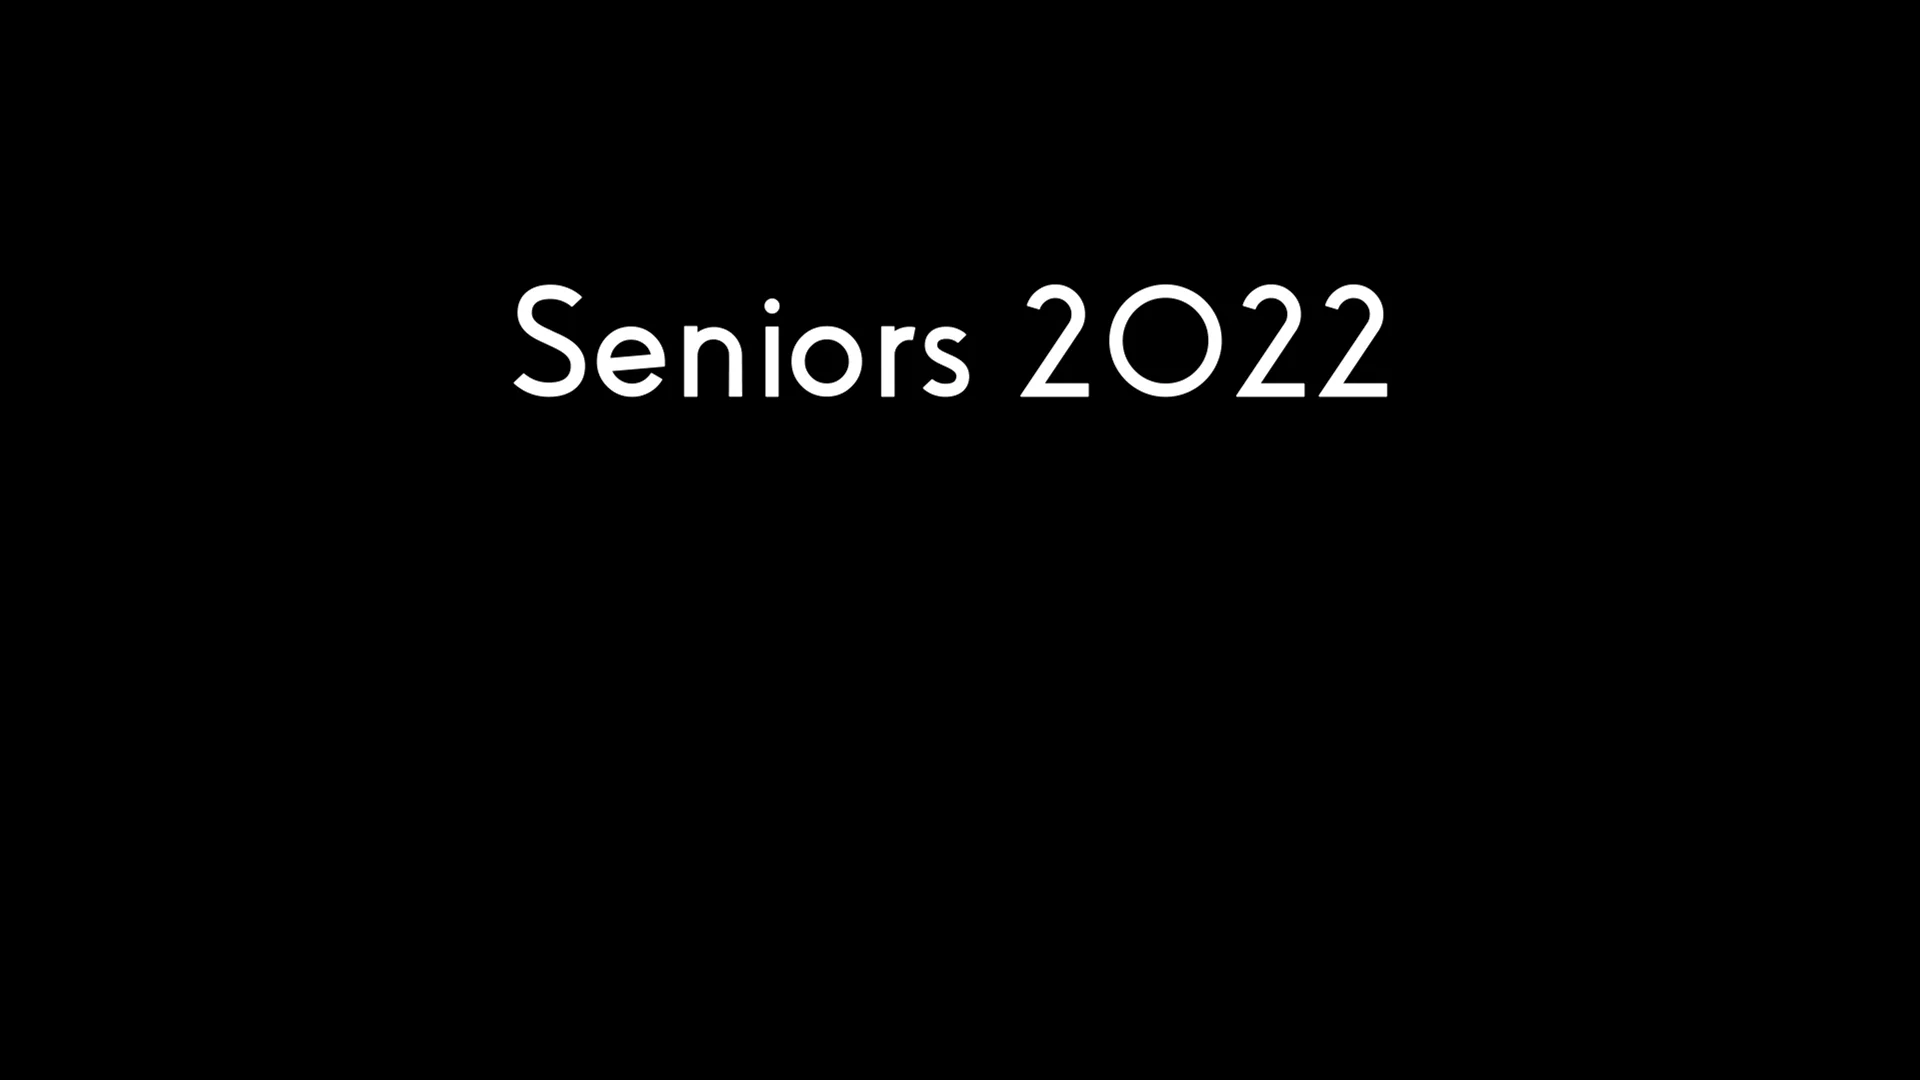 seniors 2022 wallpaper